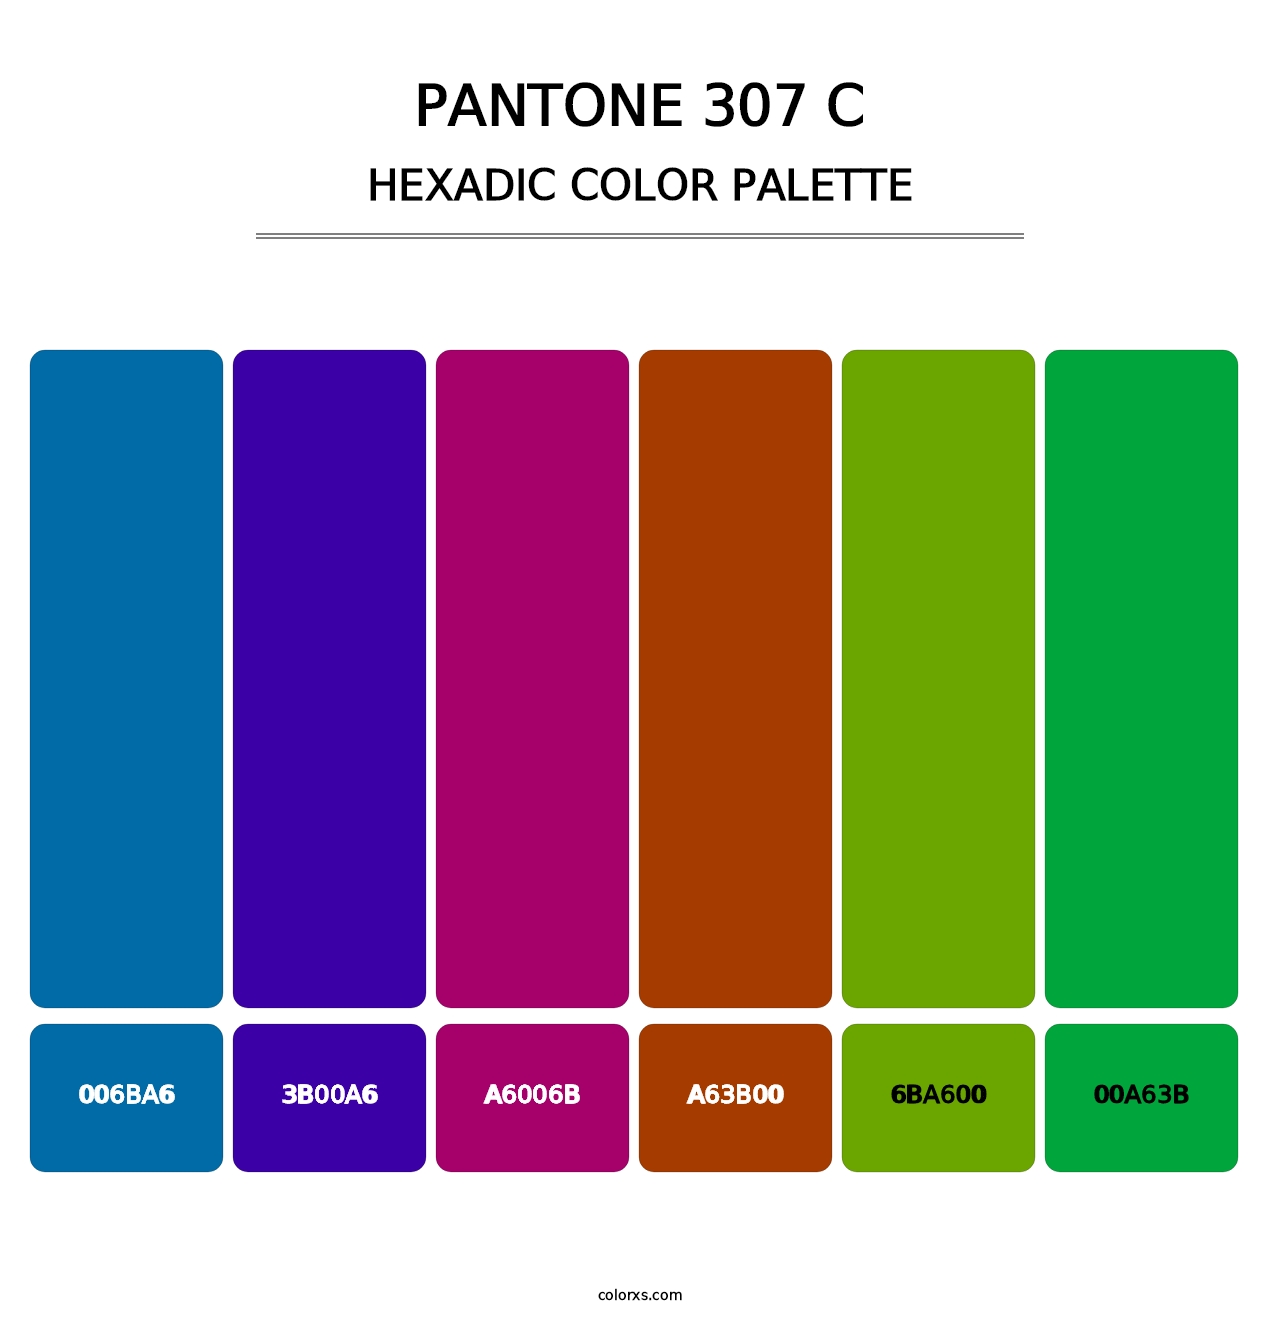 PANTONE 307 C - Hexadic Color Palette